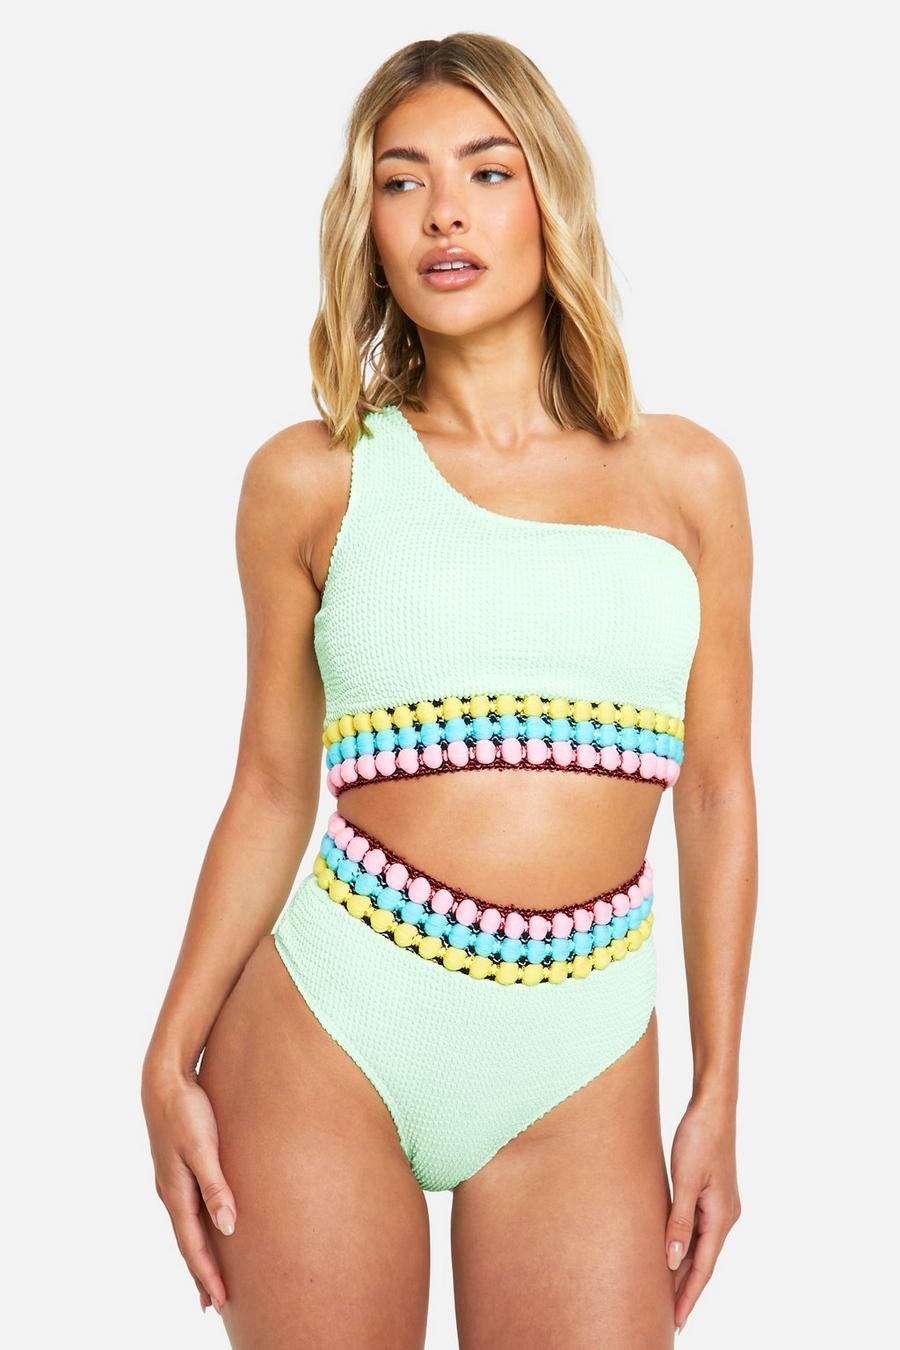 Einärmliger Bikini in Knitteroptik mit Pom-Poms, Neon-green